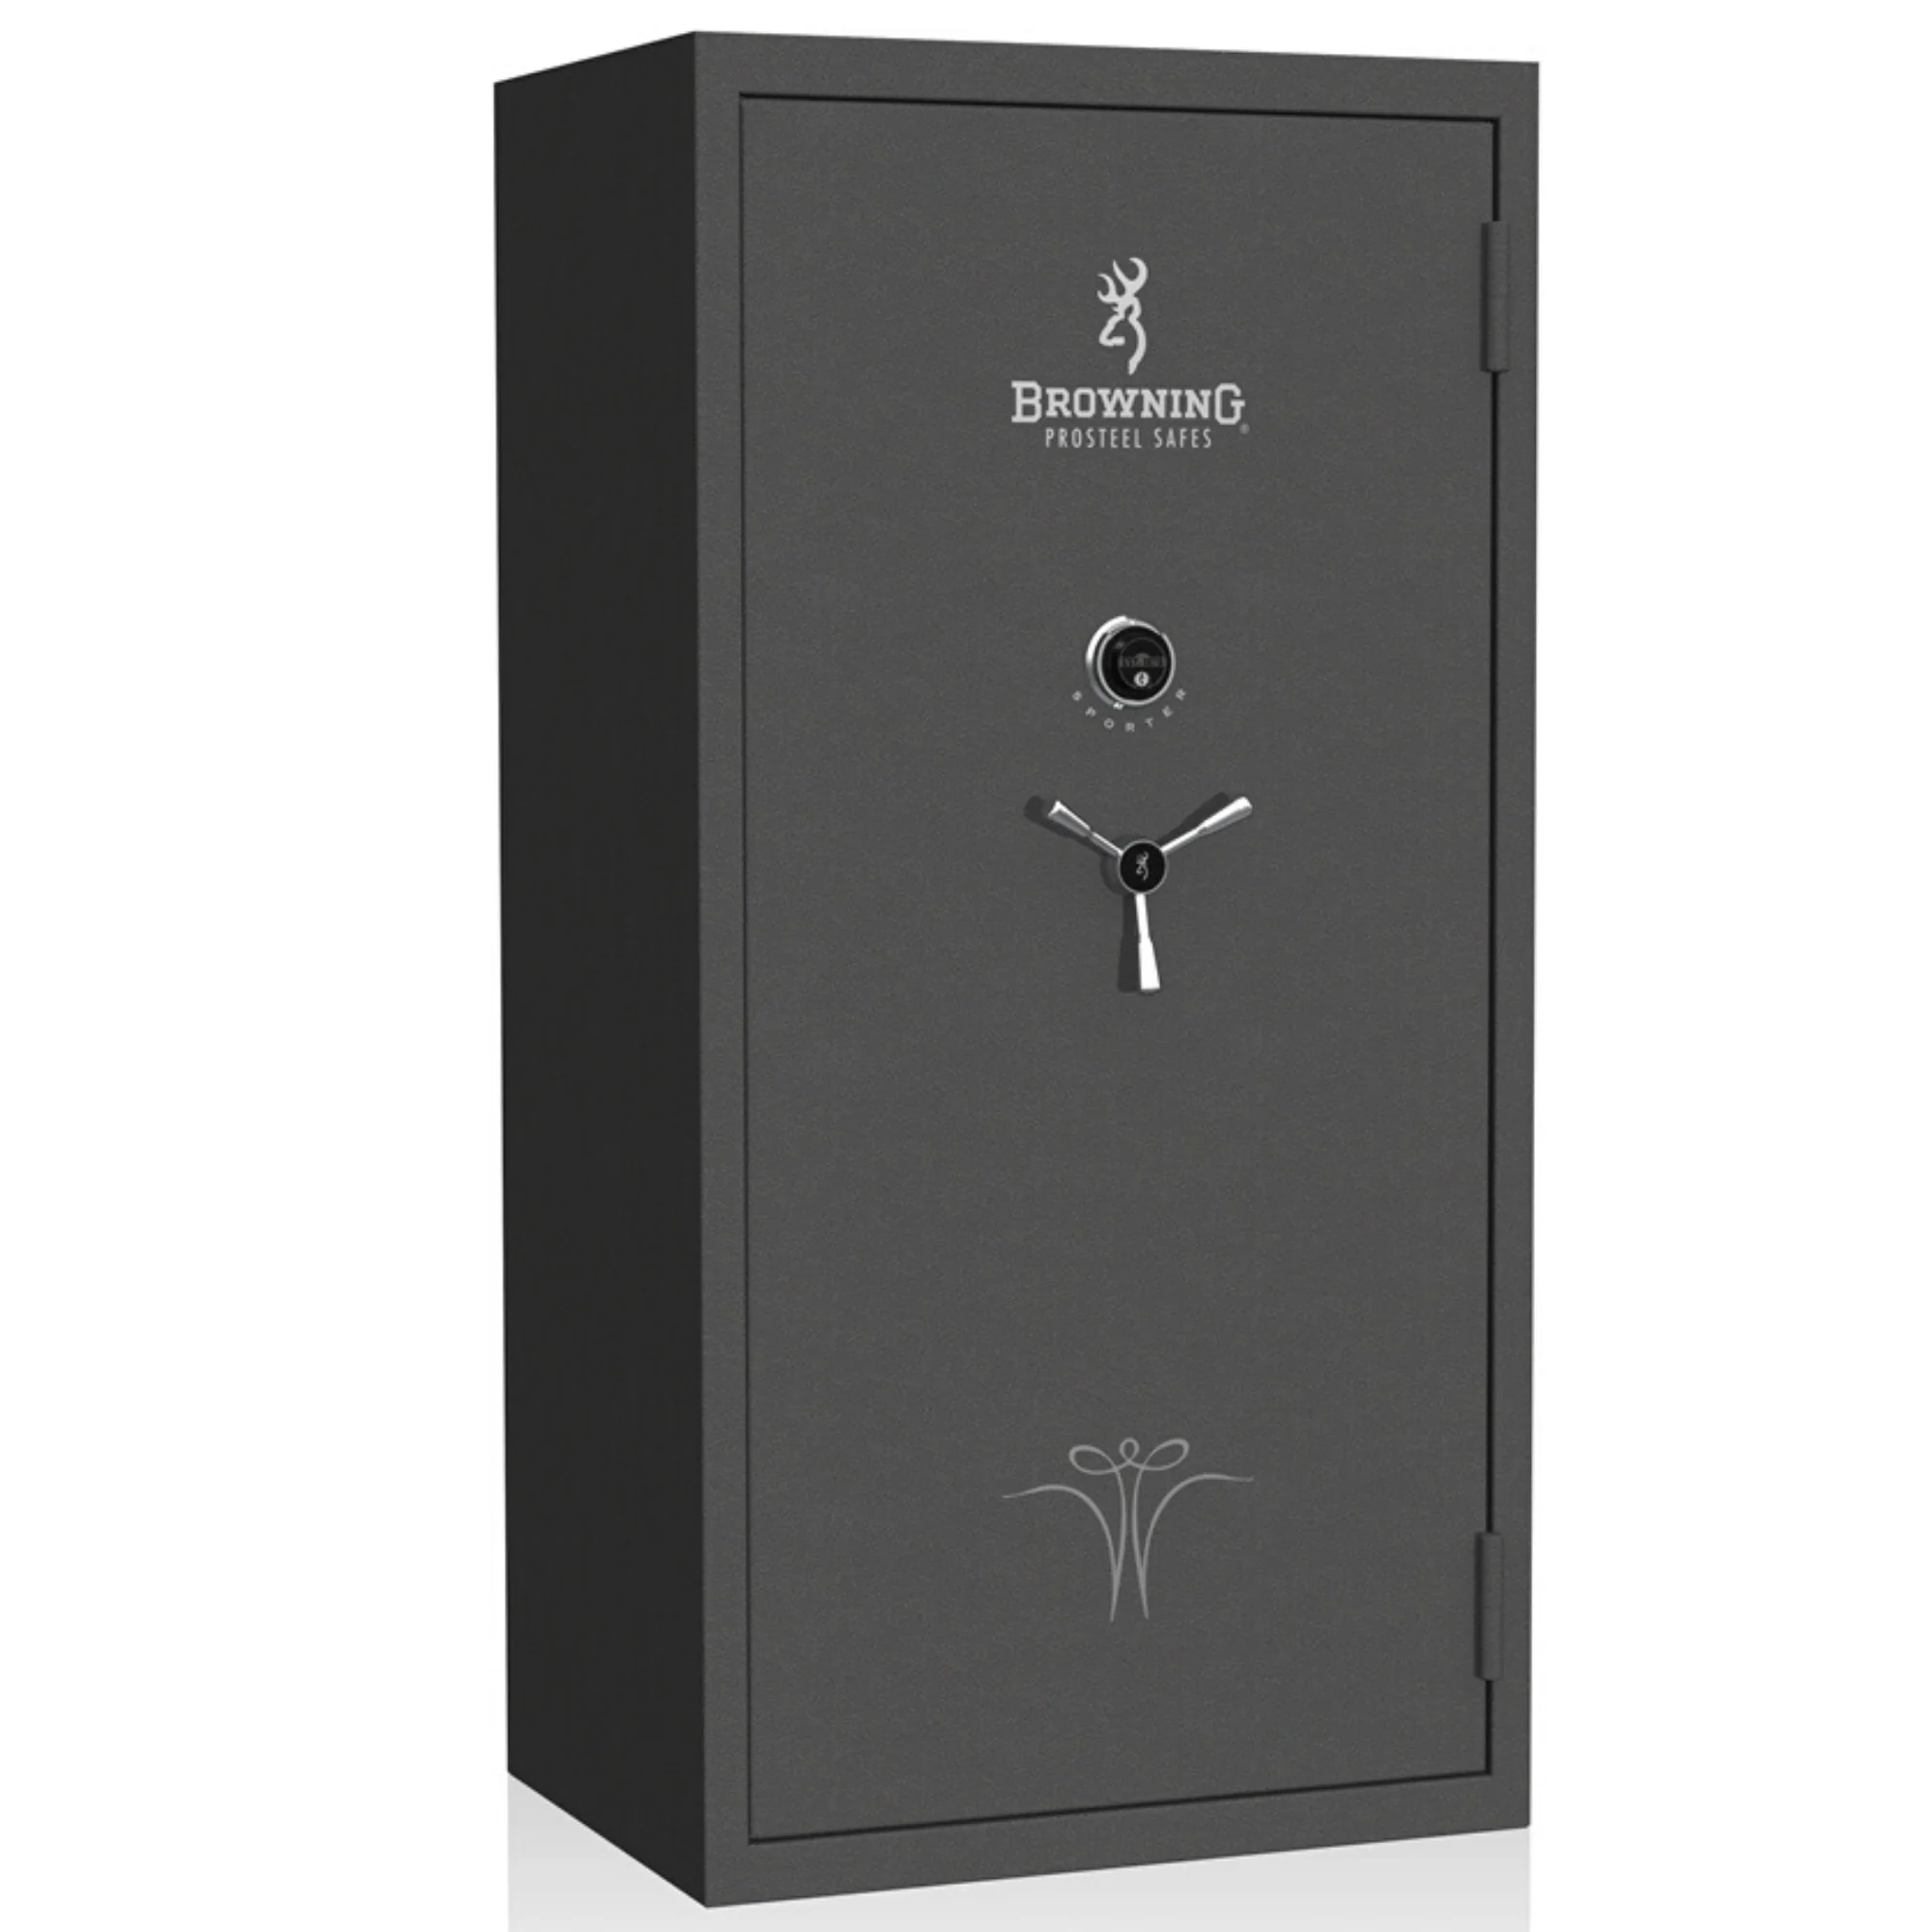 Browning Prosteel Series | DPX Door Storage | Heavy Steel | Mechanical Lock | Magazine Storage